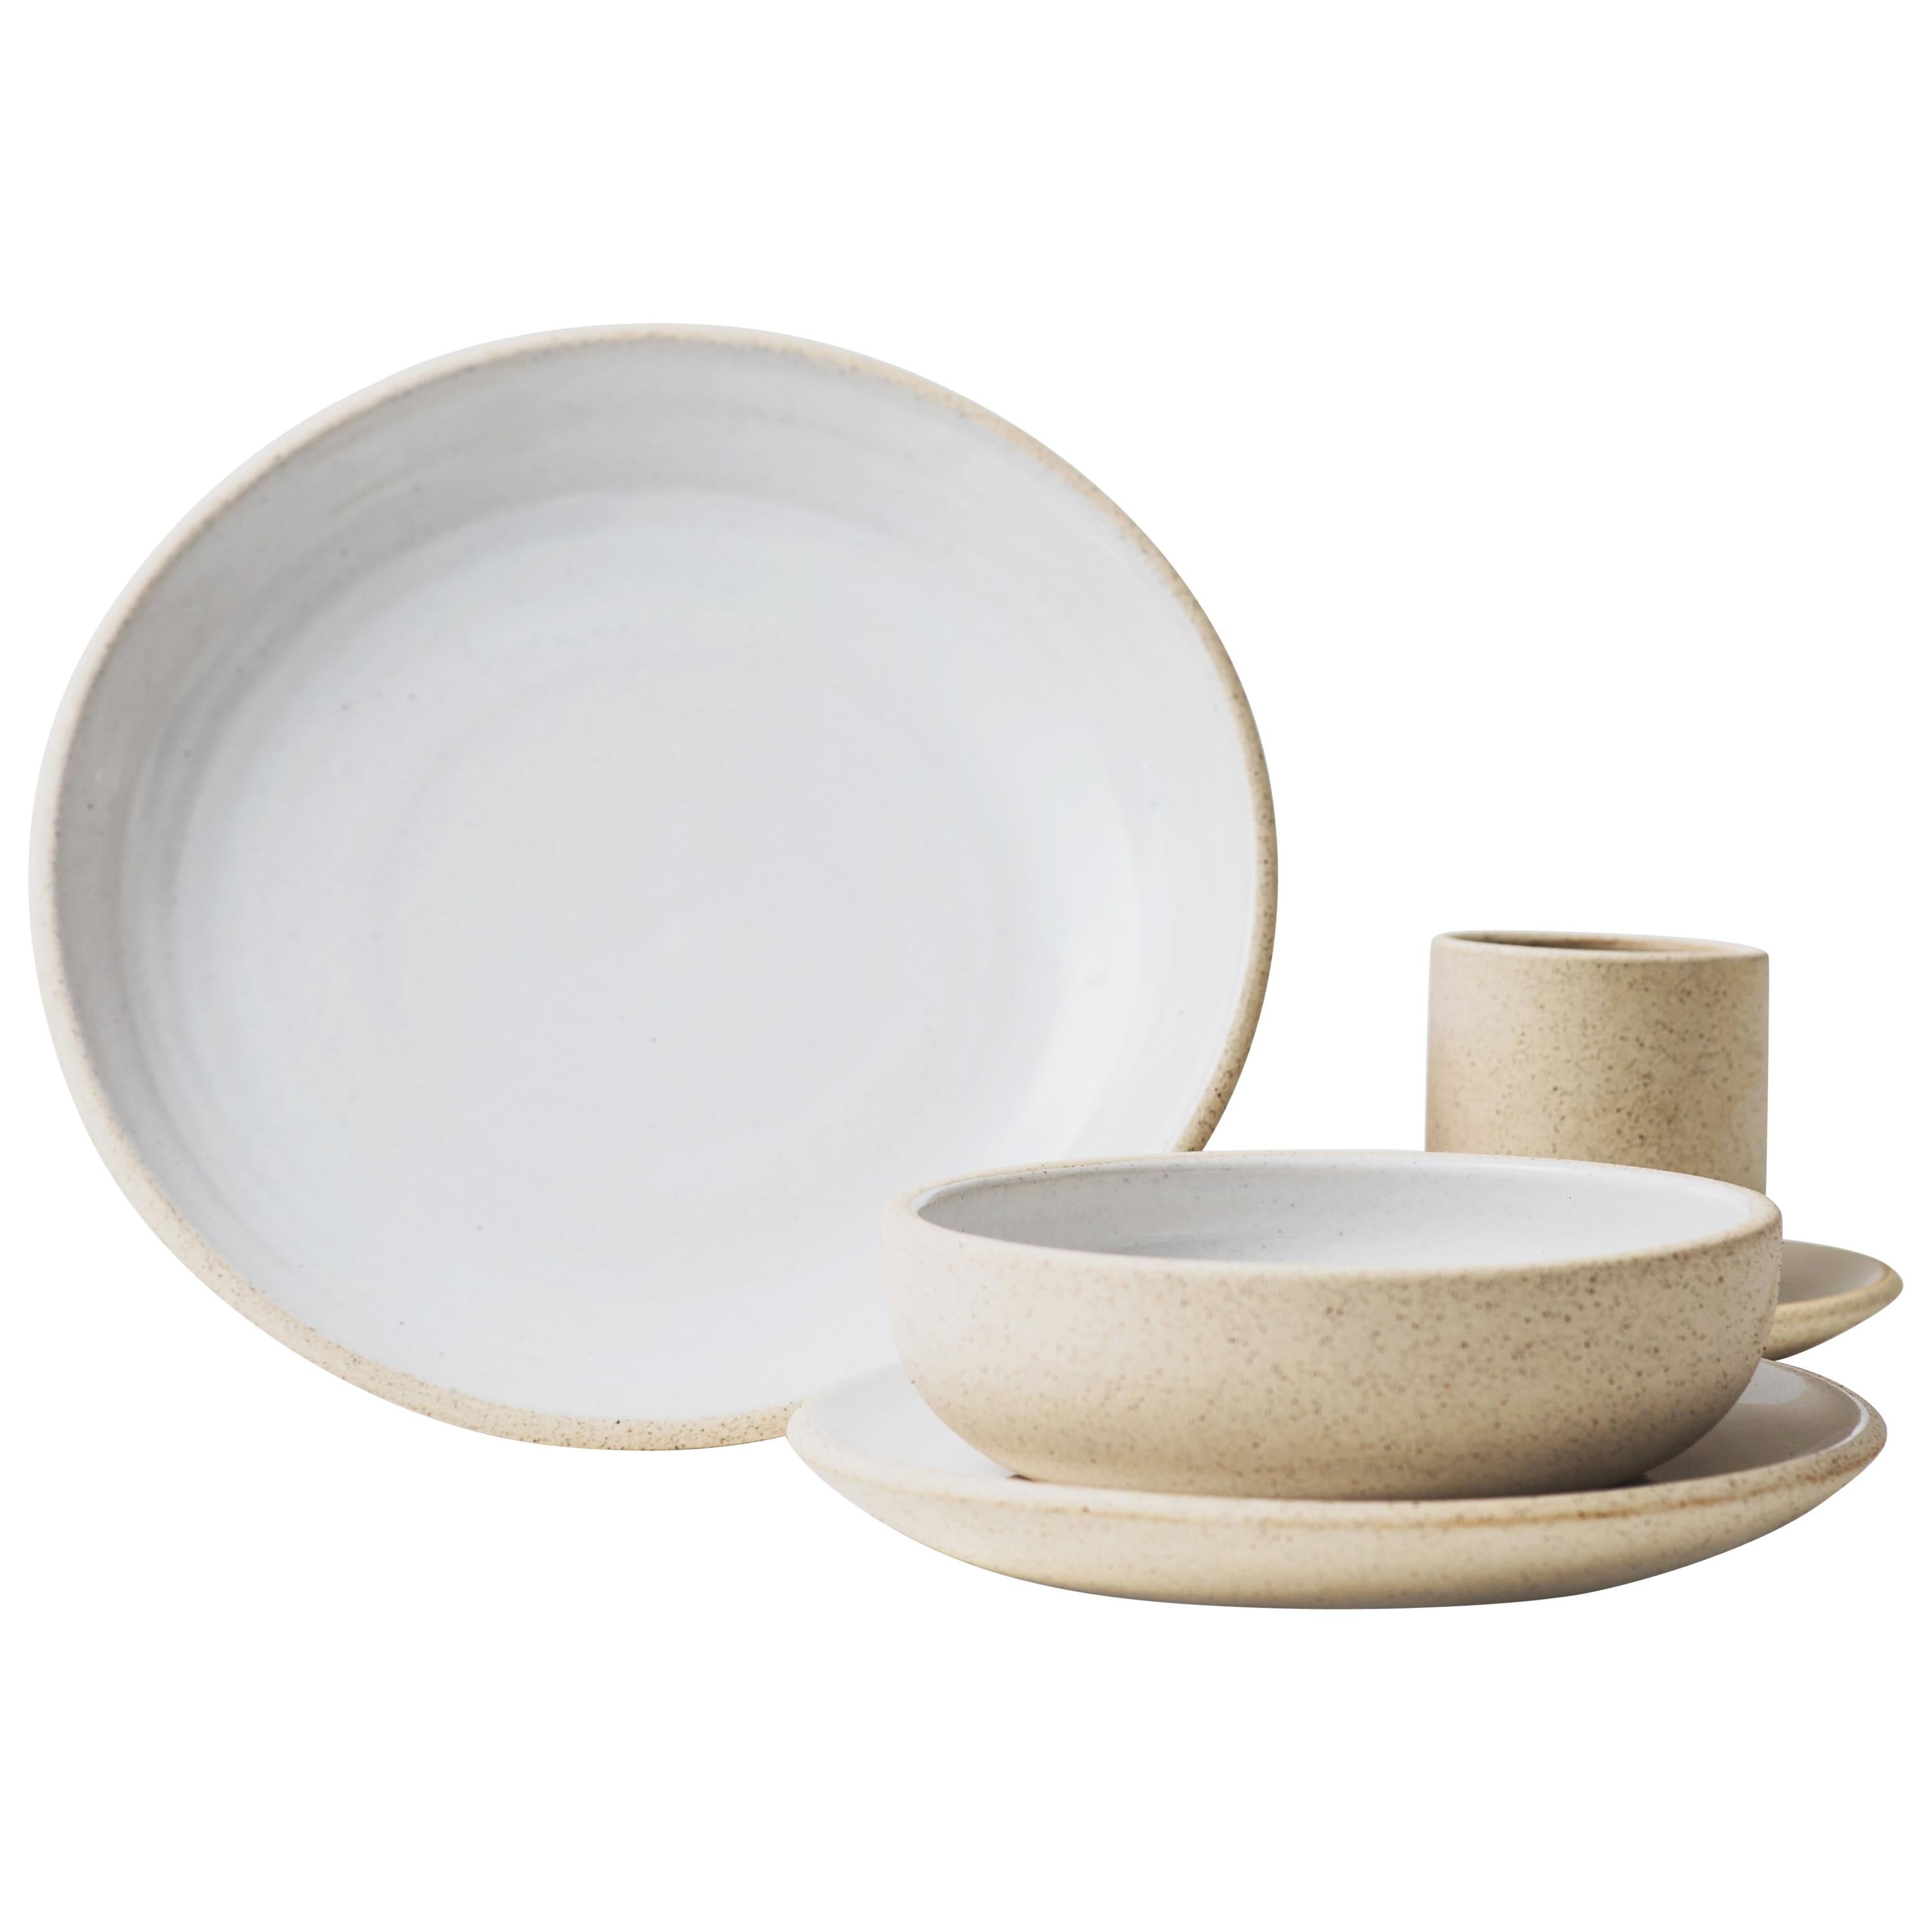 Handmade Ceramic Stoneware Dinner Plate in Ivory, in Stock